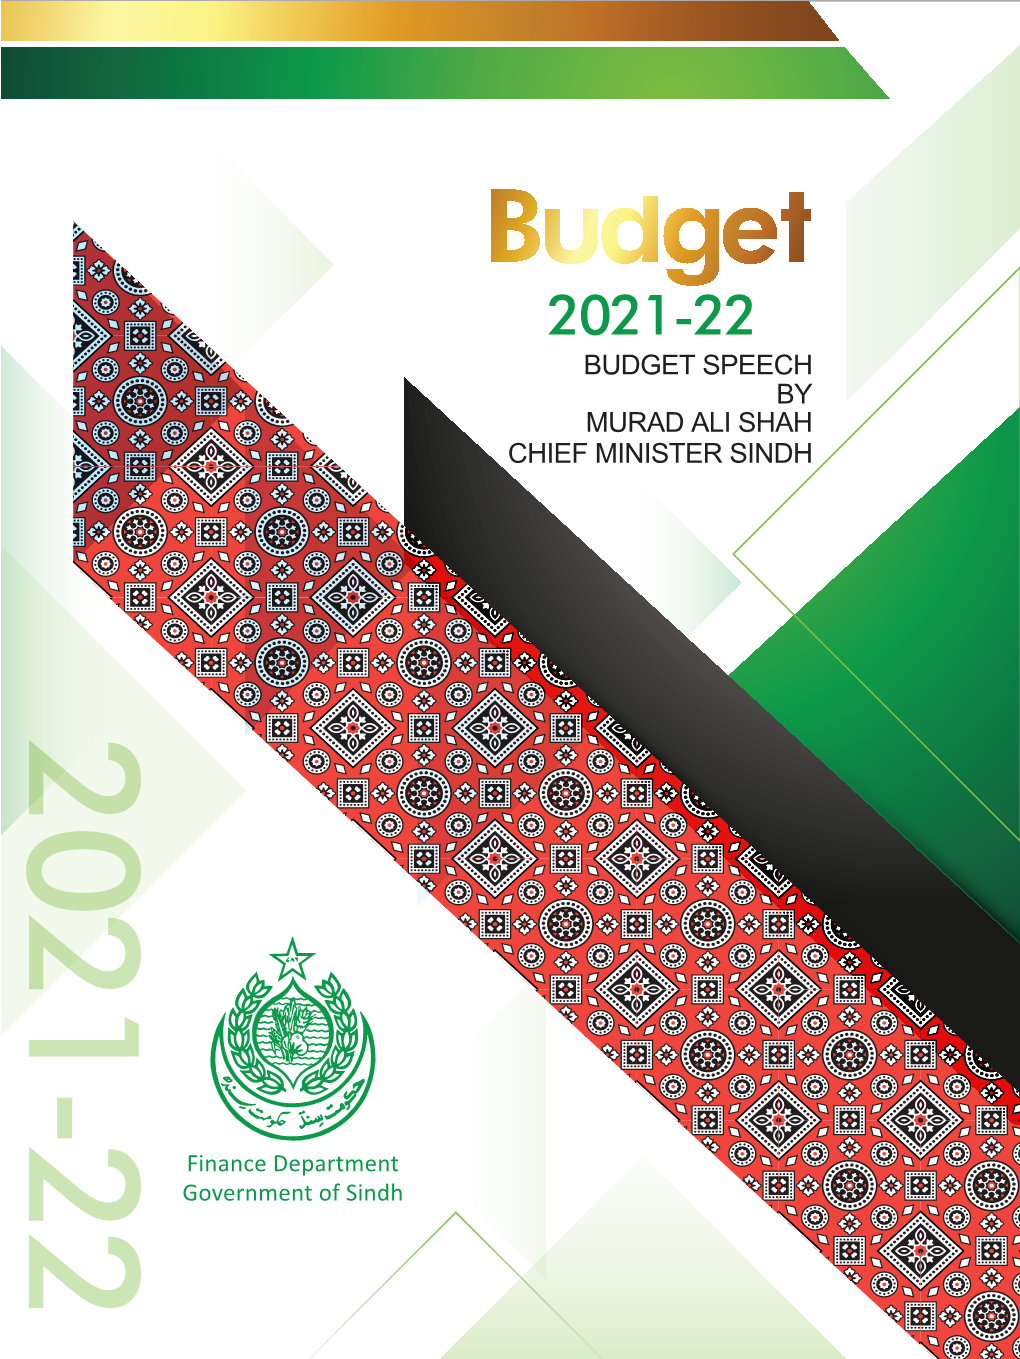 Budget Speech by Murad Ali Shah Chief Minister Sindh